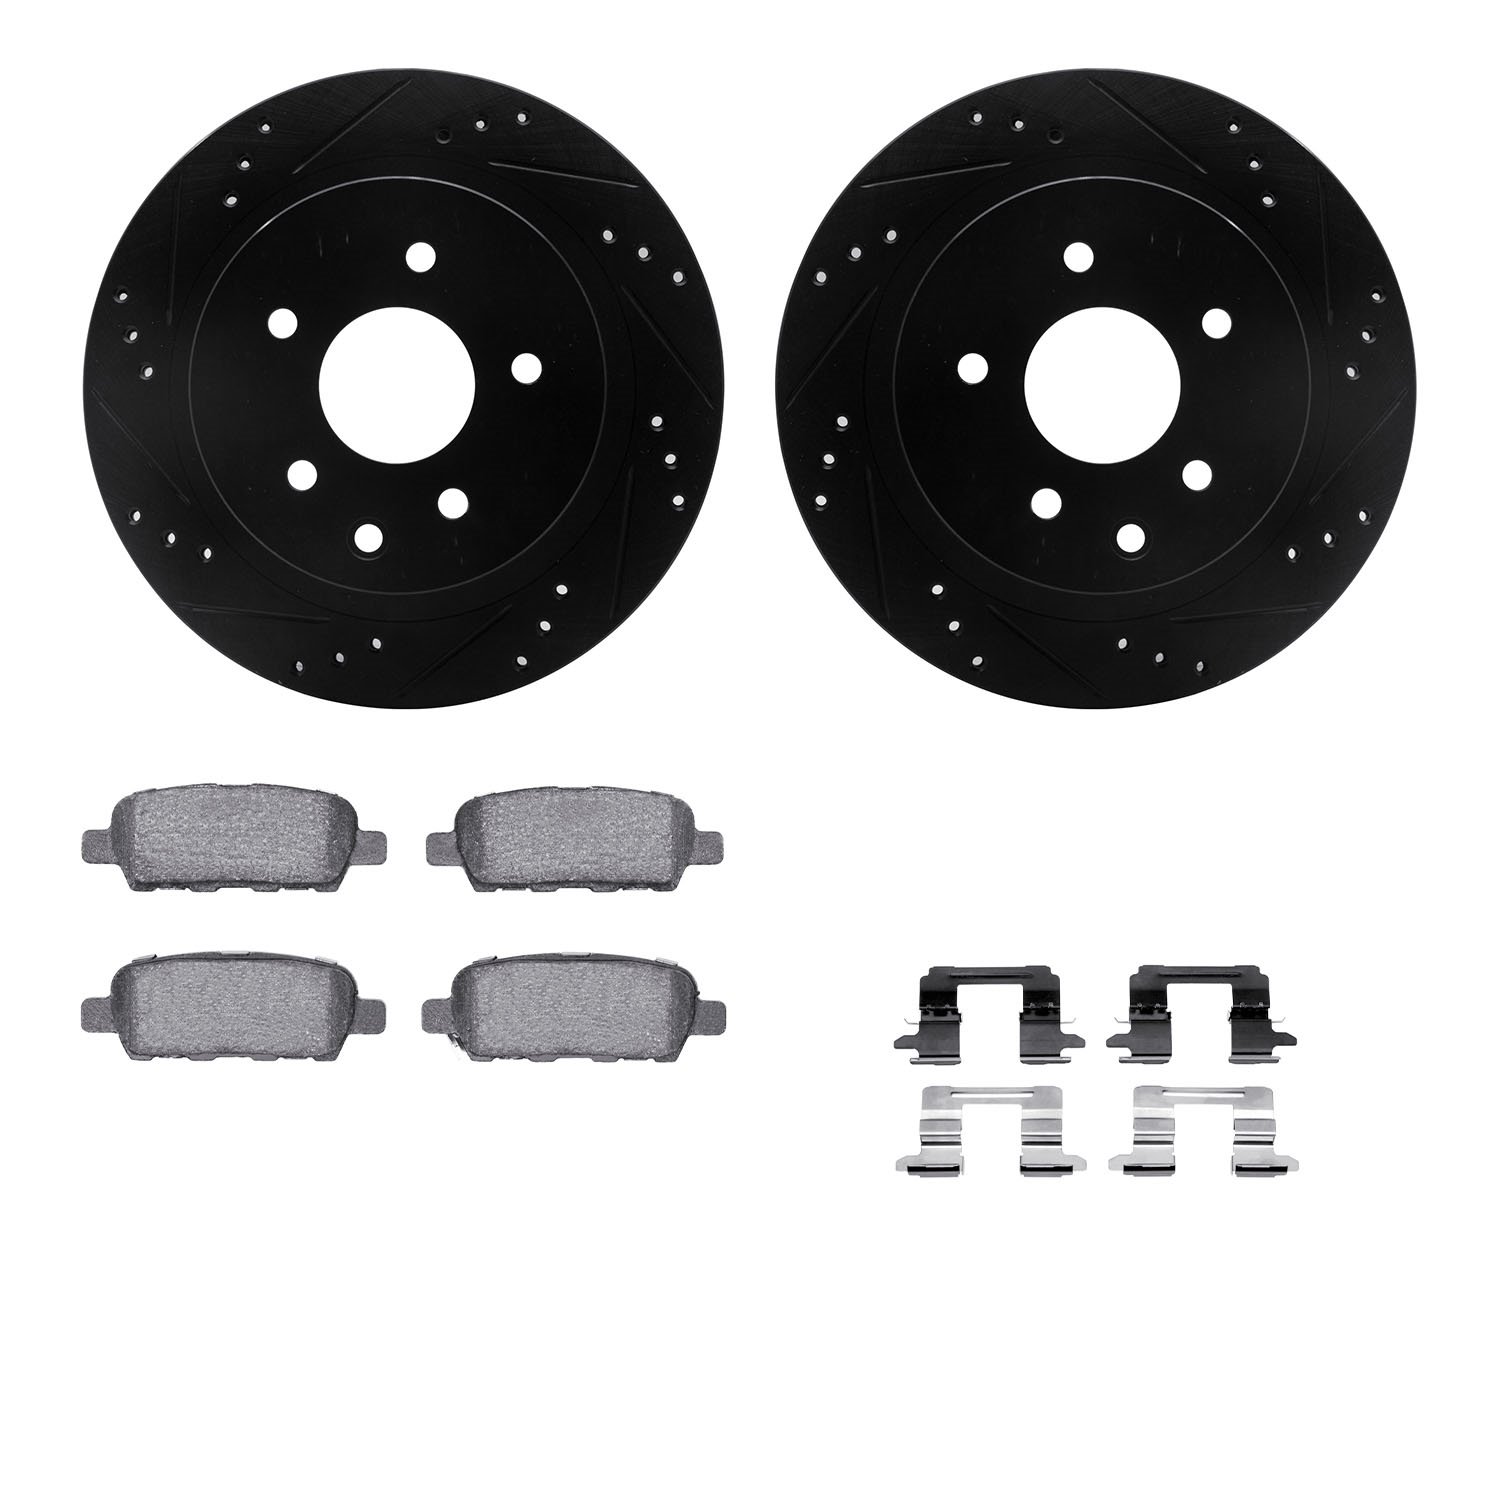 8612-67010 Drilled/Slotted Brake Rotors w/5000 Euro Ceramic Brake Pads Kit & Hardware [Black], Fits Select Multiple Makes/Models